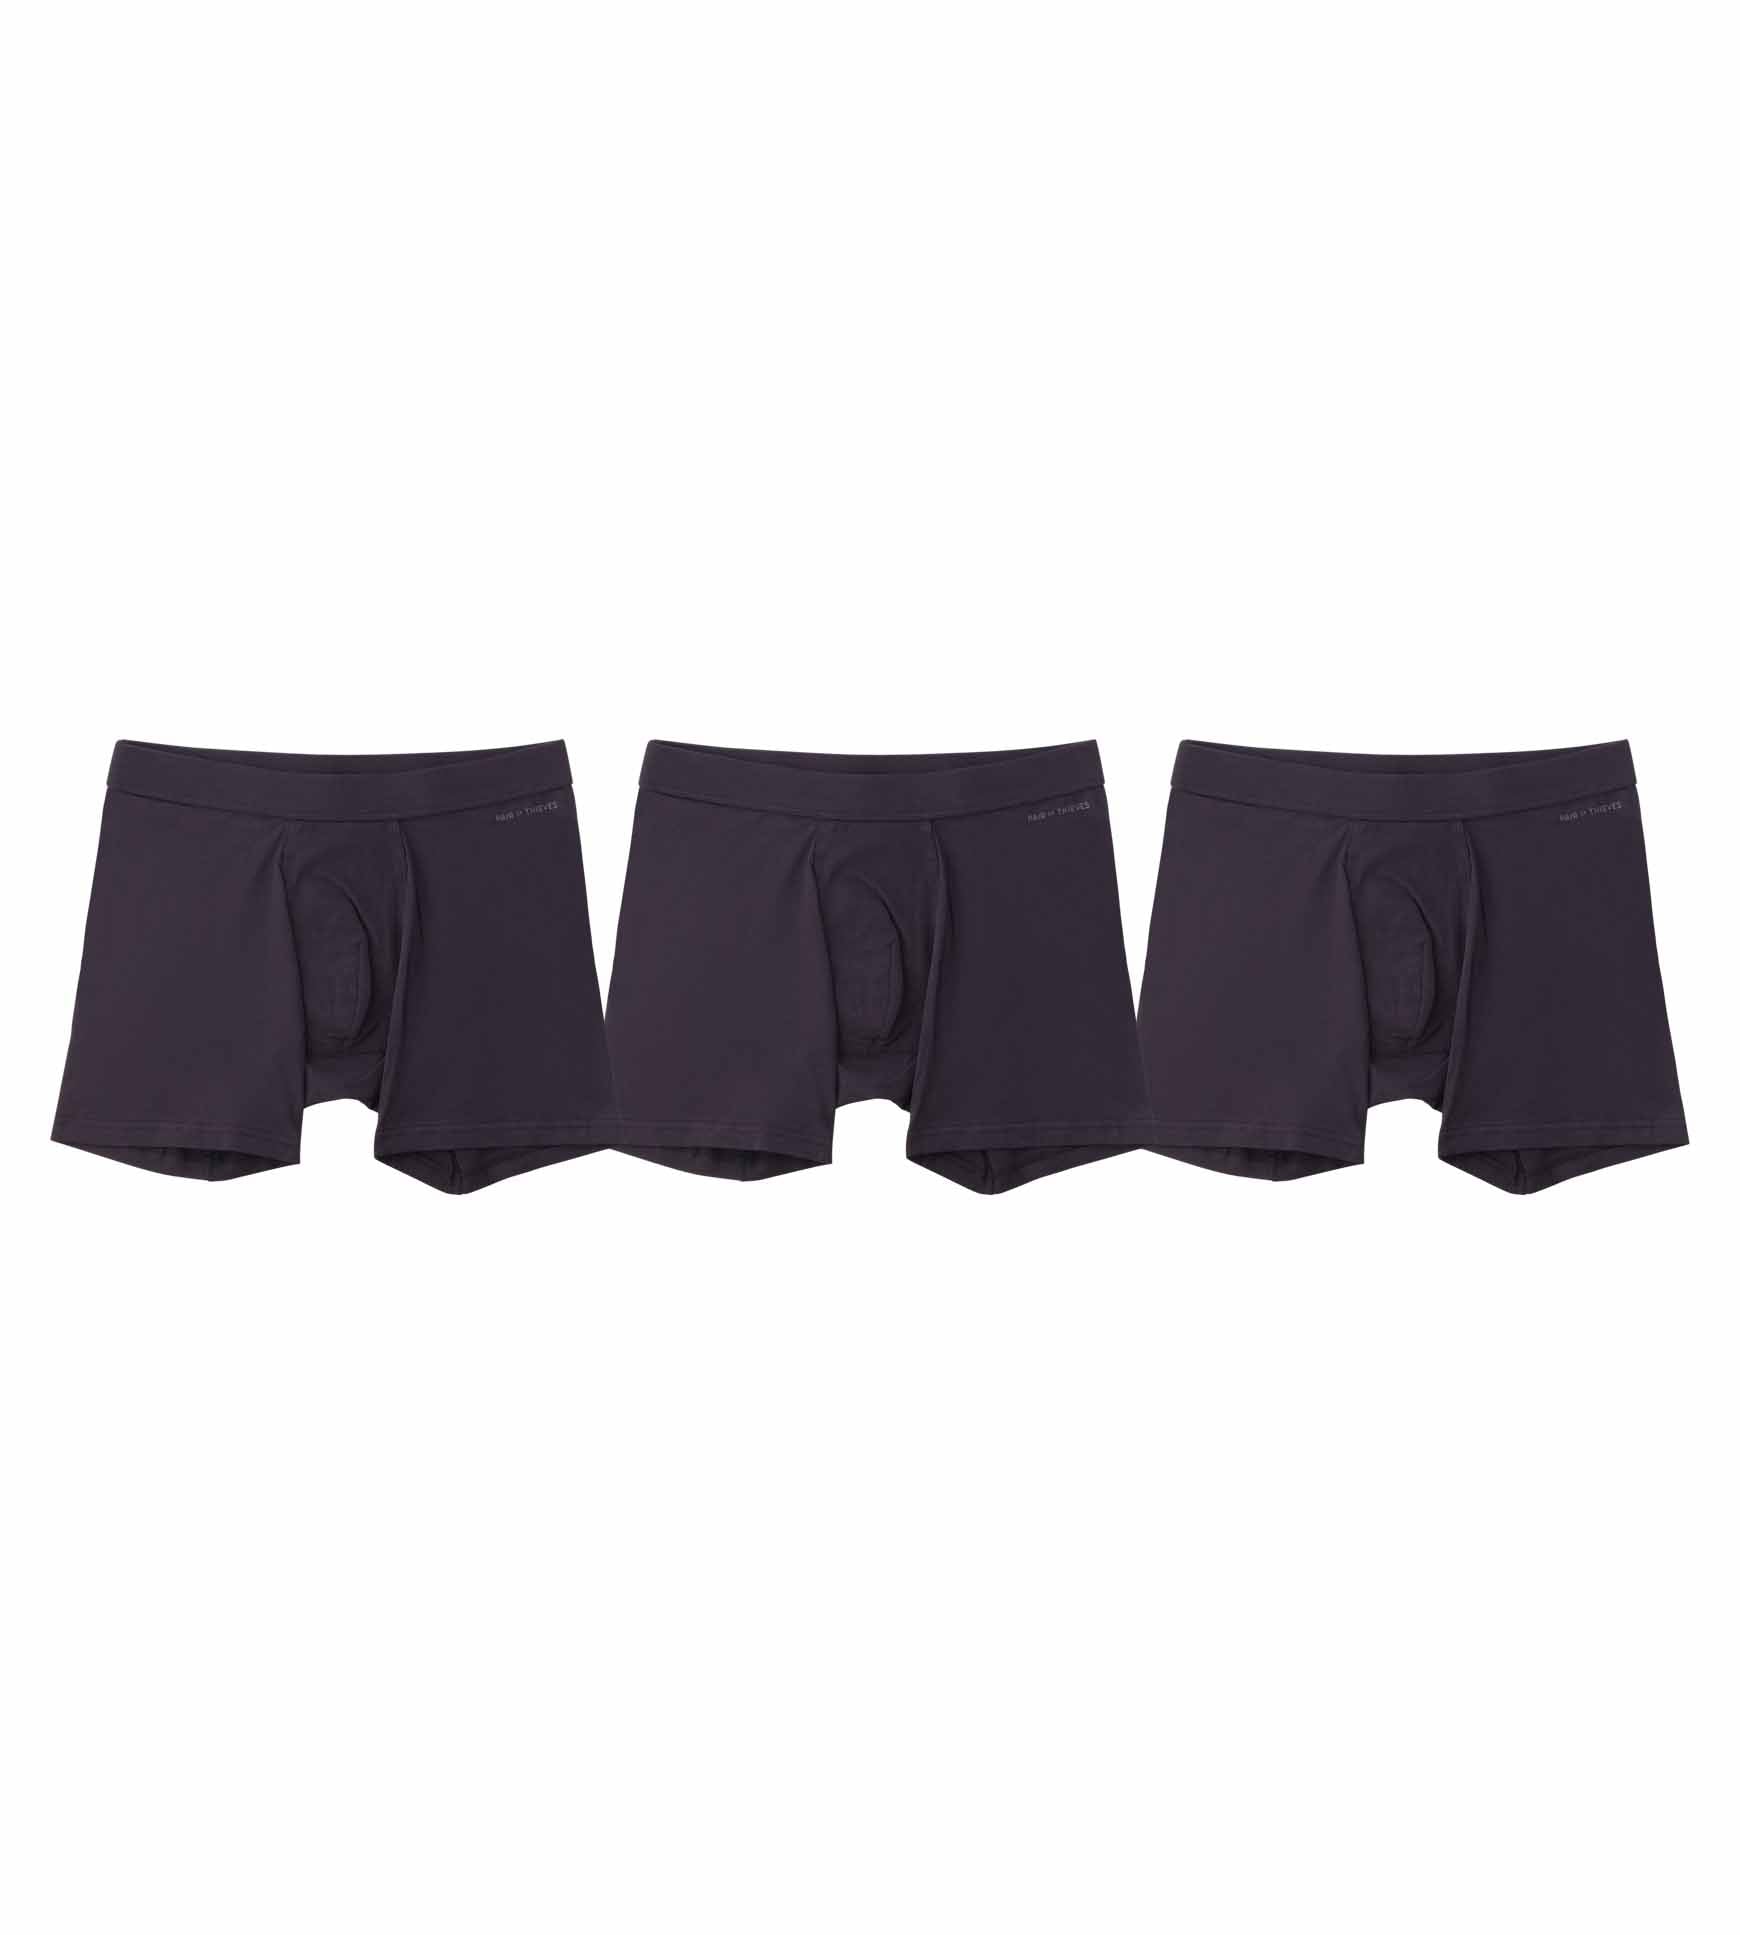 Pair of Thieves Men's Long Boxer Shorts Black Purple Sz Medium Underwear  Cotton